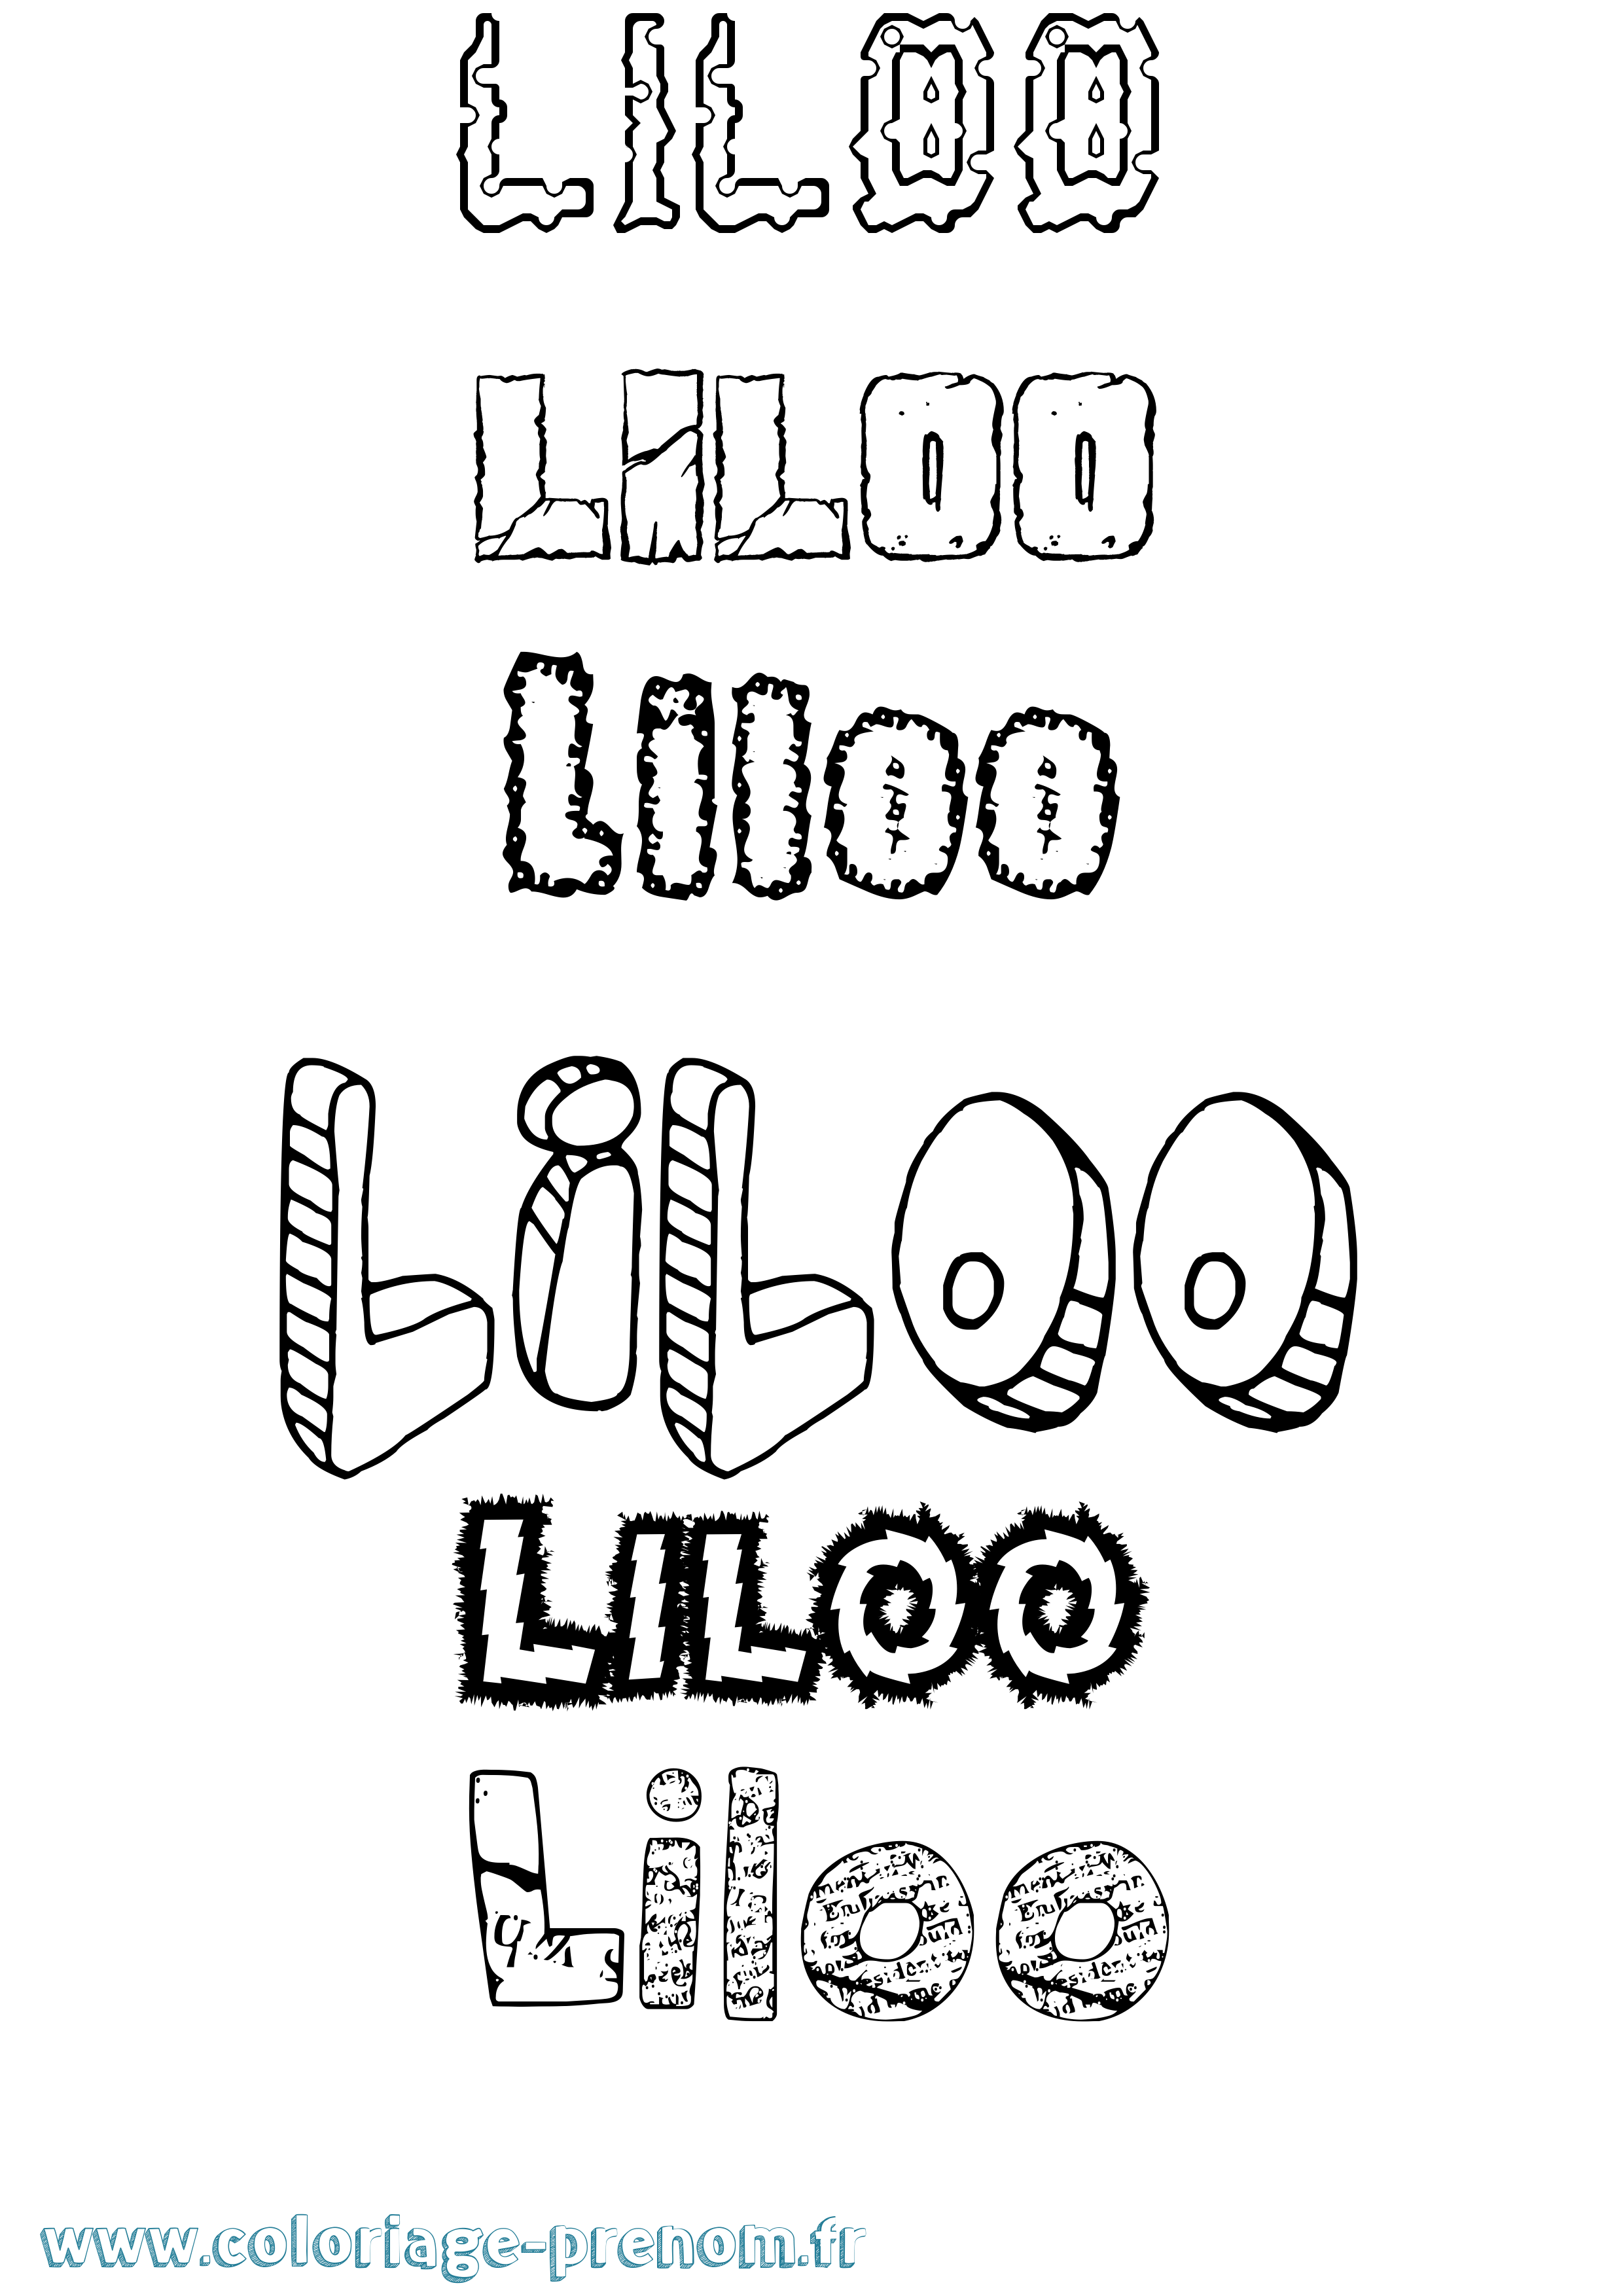 Coloriage prénom Liloo Destructuré